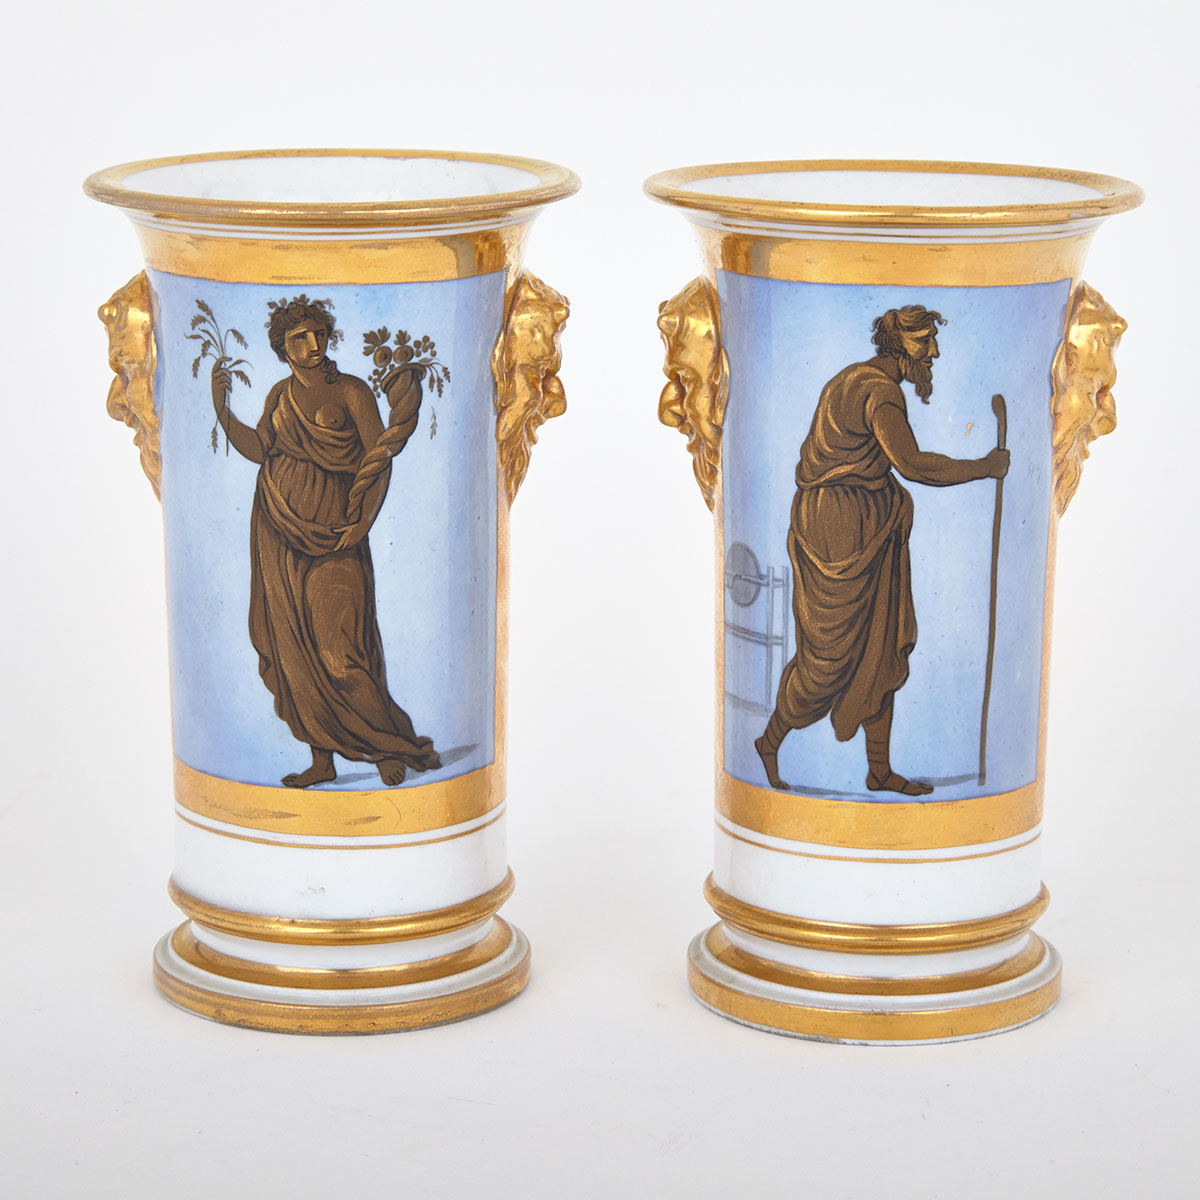 Pair of Barr, Flight & Barr Worcester Spill Vases, c.1804-13